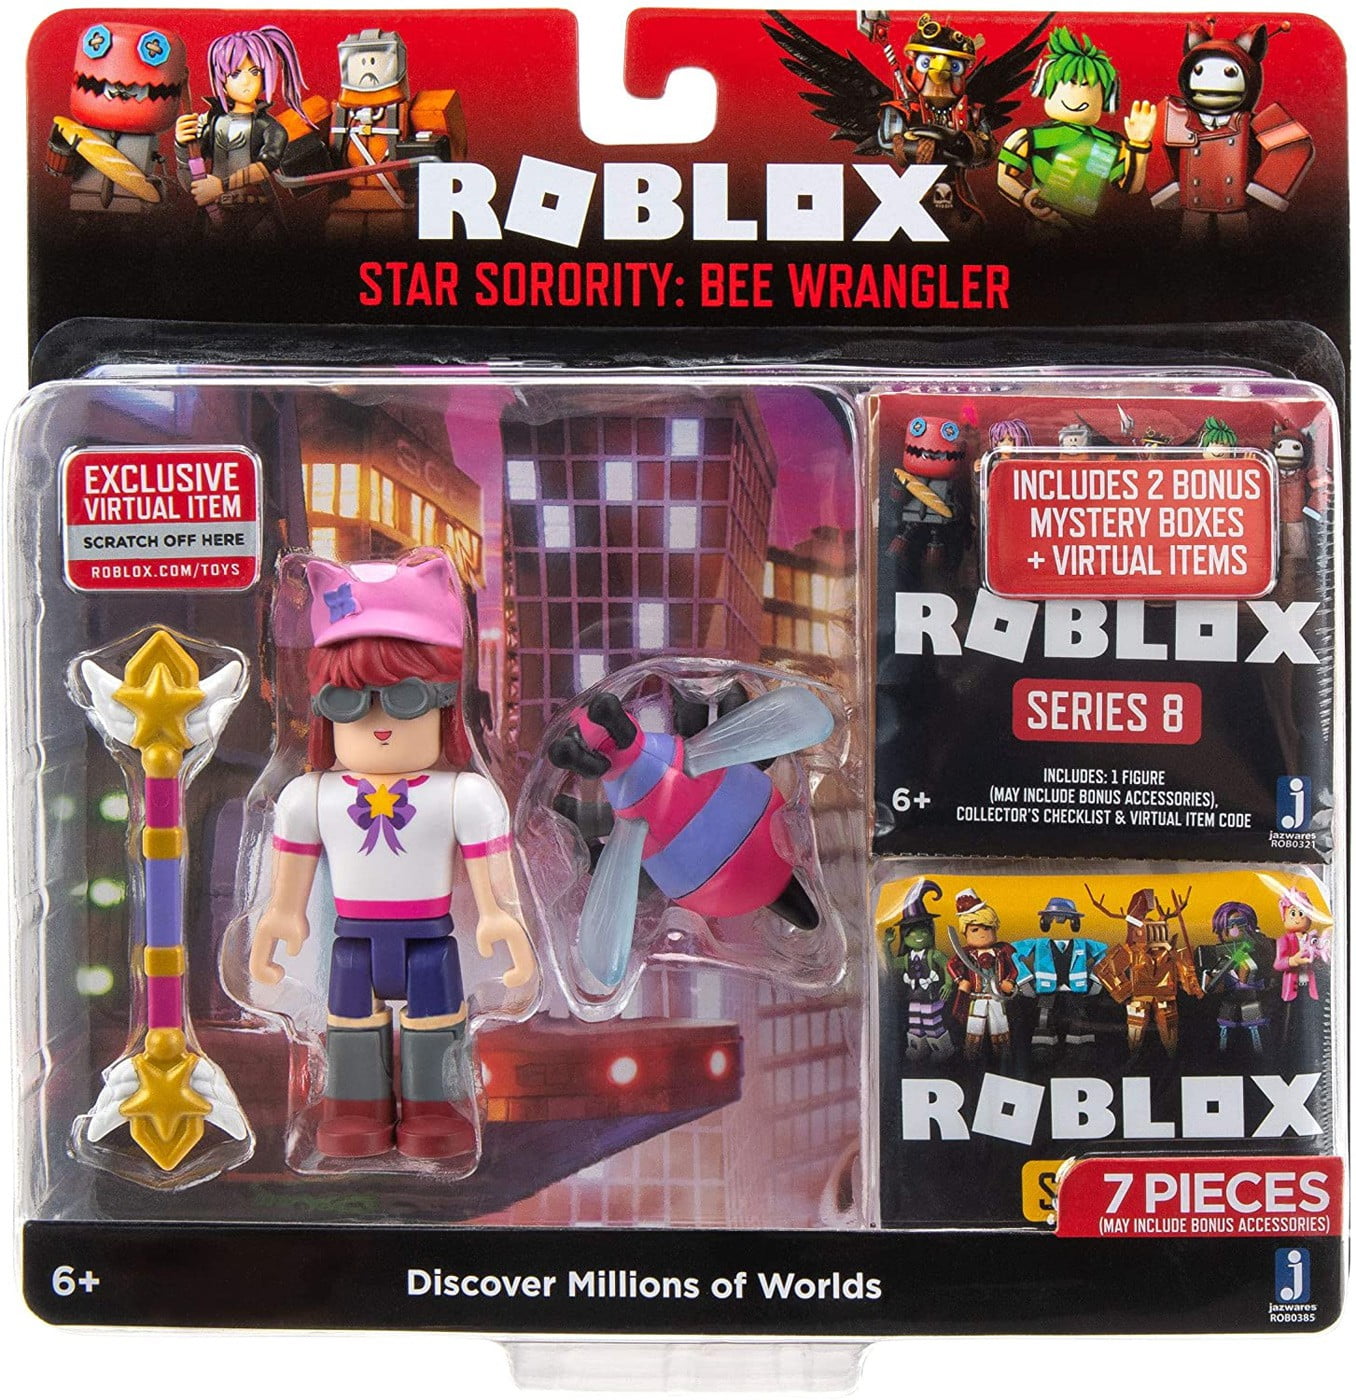 ROBLOX Action World Zero Series 5 12 Mini Figure Virtual Code Set for sale  online